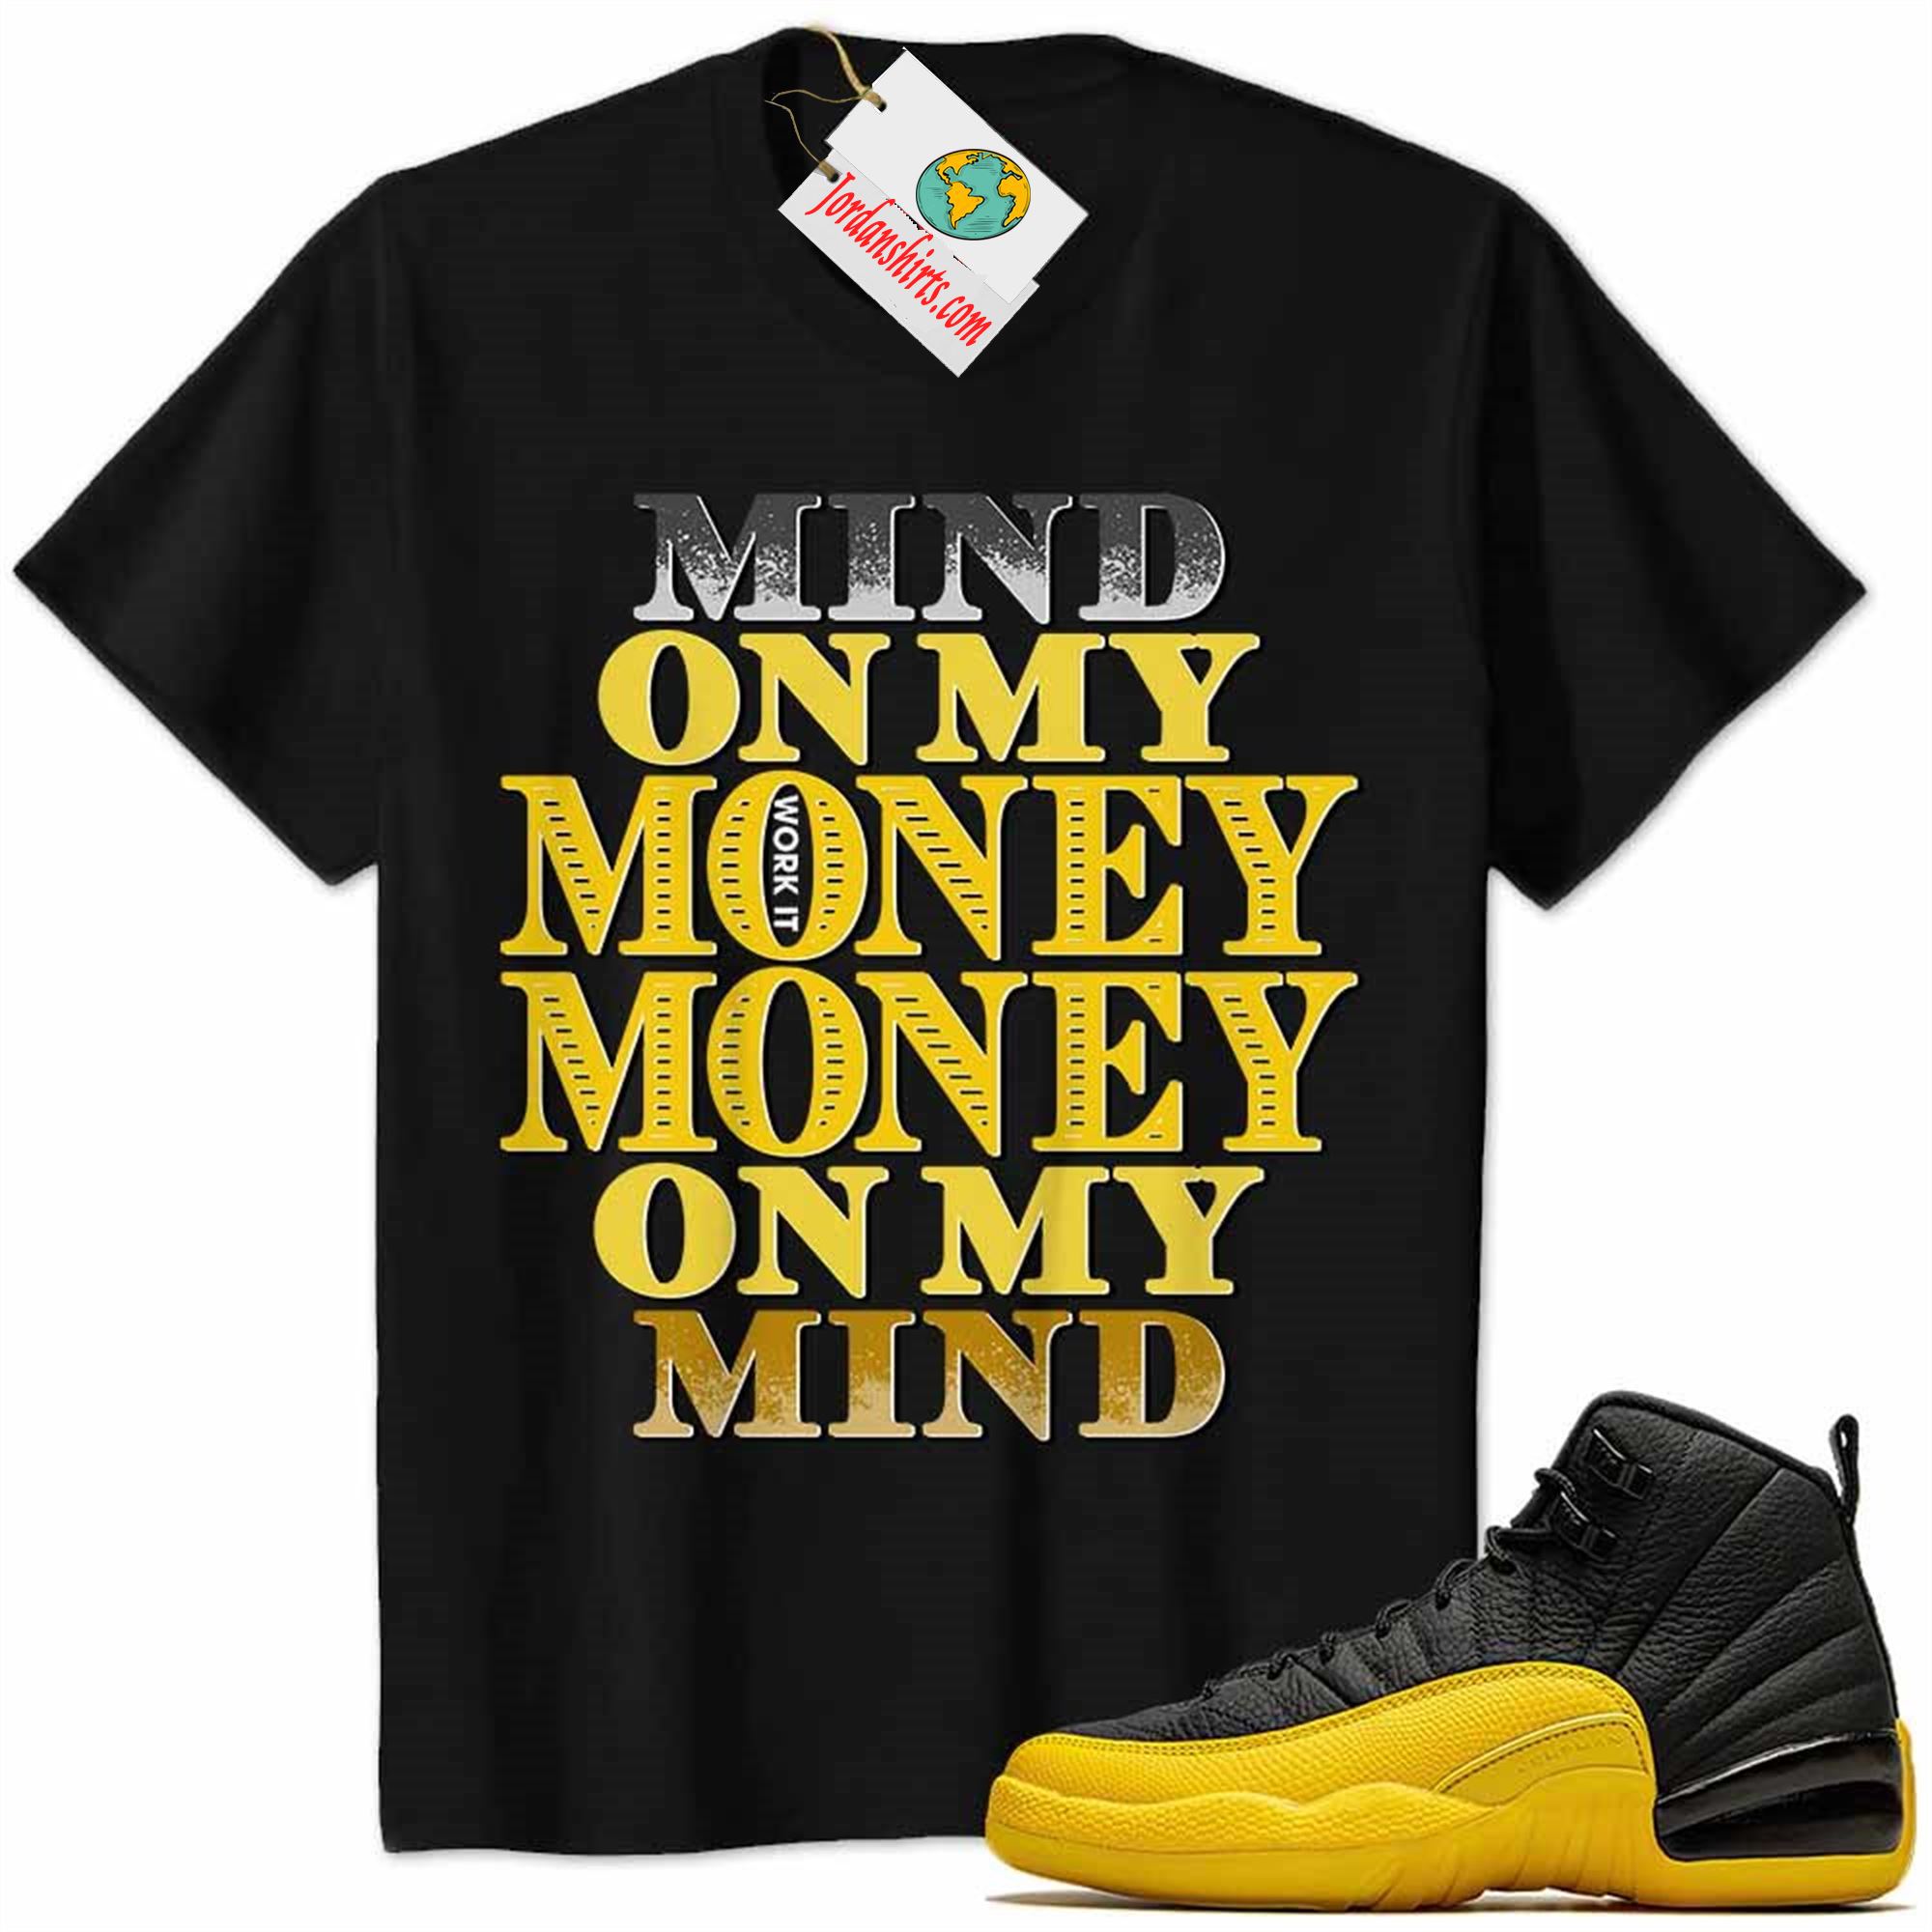 Jordan 12 Shirt, Jordan 12 University Gold Shirt Mind On My Money Money On My Mind Black Size Up To 5xl